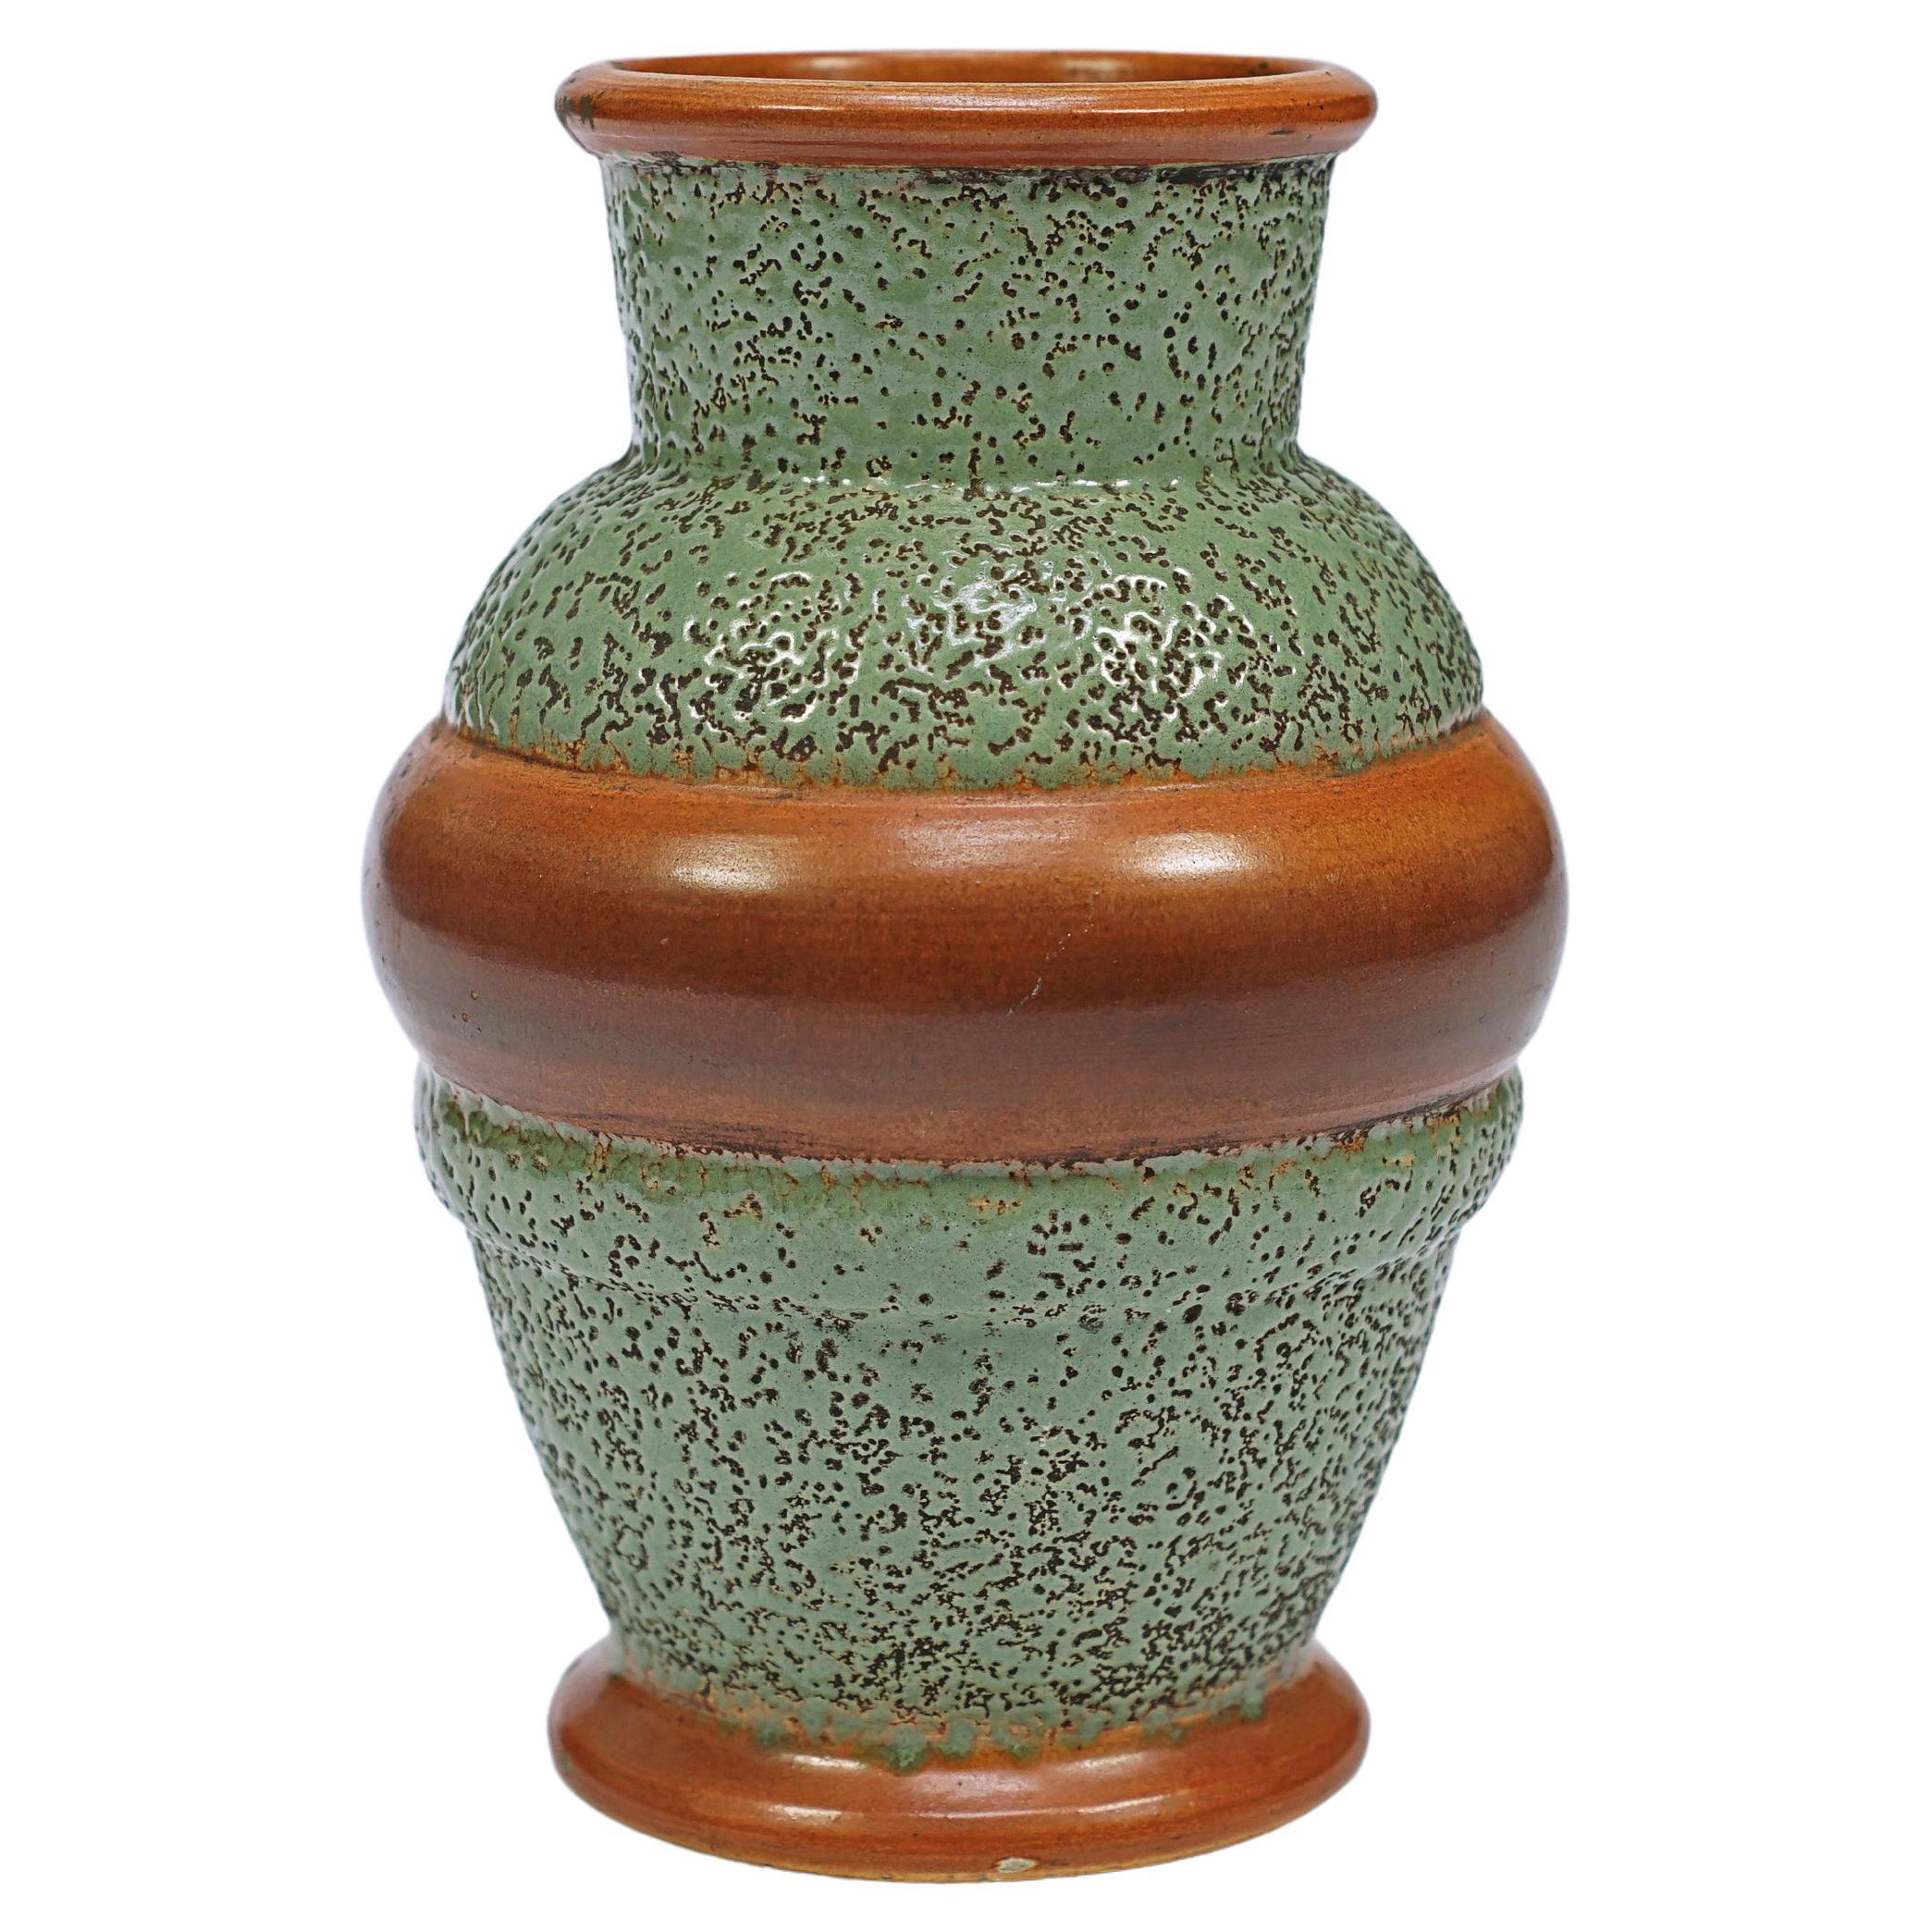 Textured Ceramic Vase by Jean Besnard